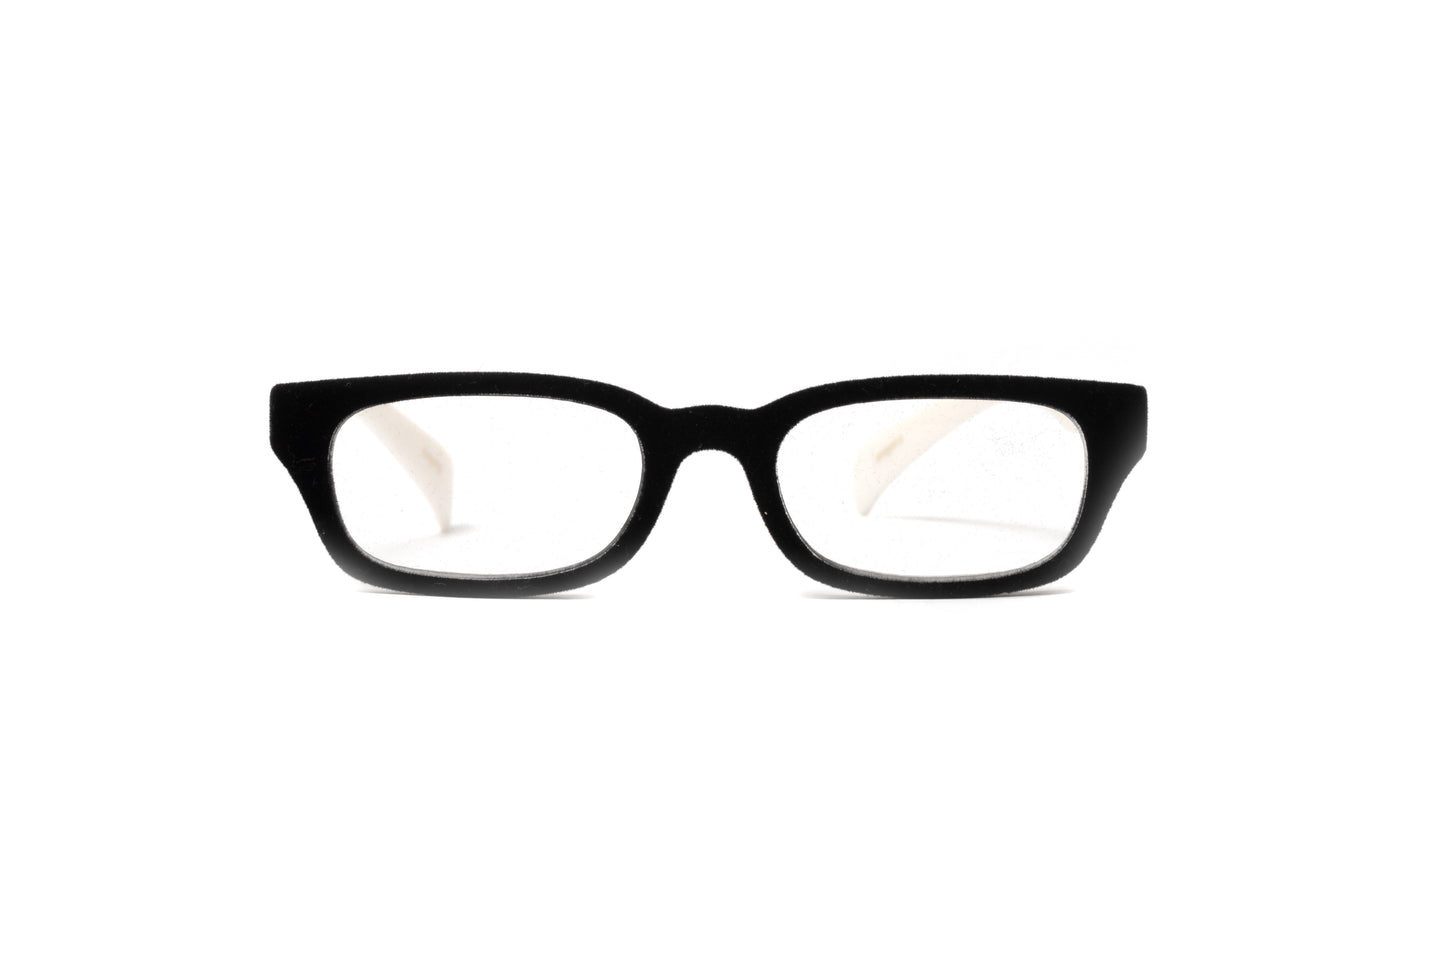 Black velvet rimmed reading glasses with matte white temples for women by Eyejets